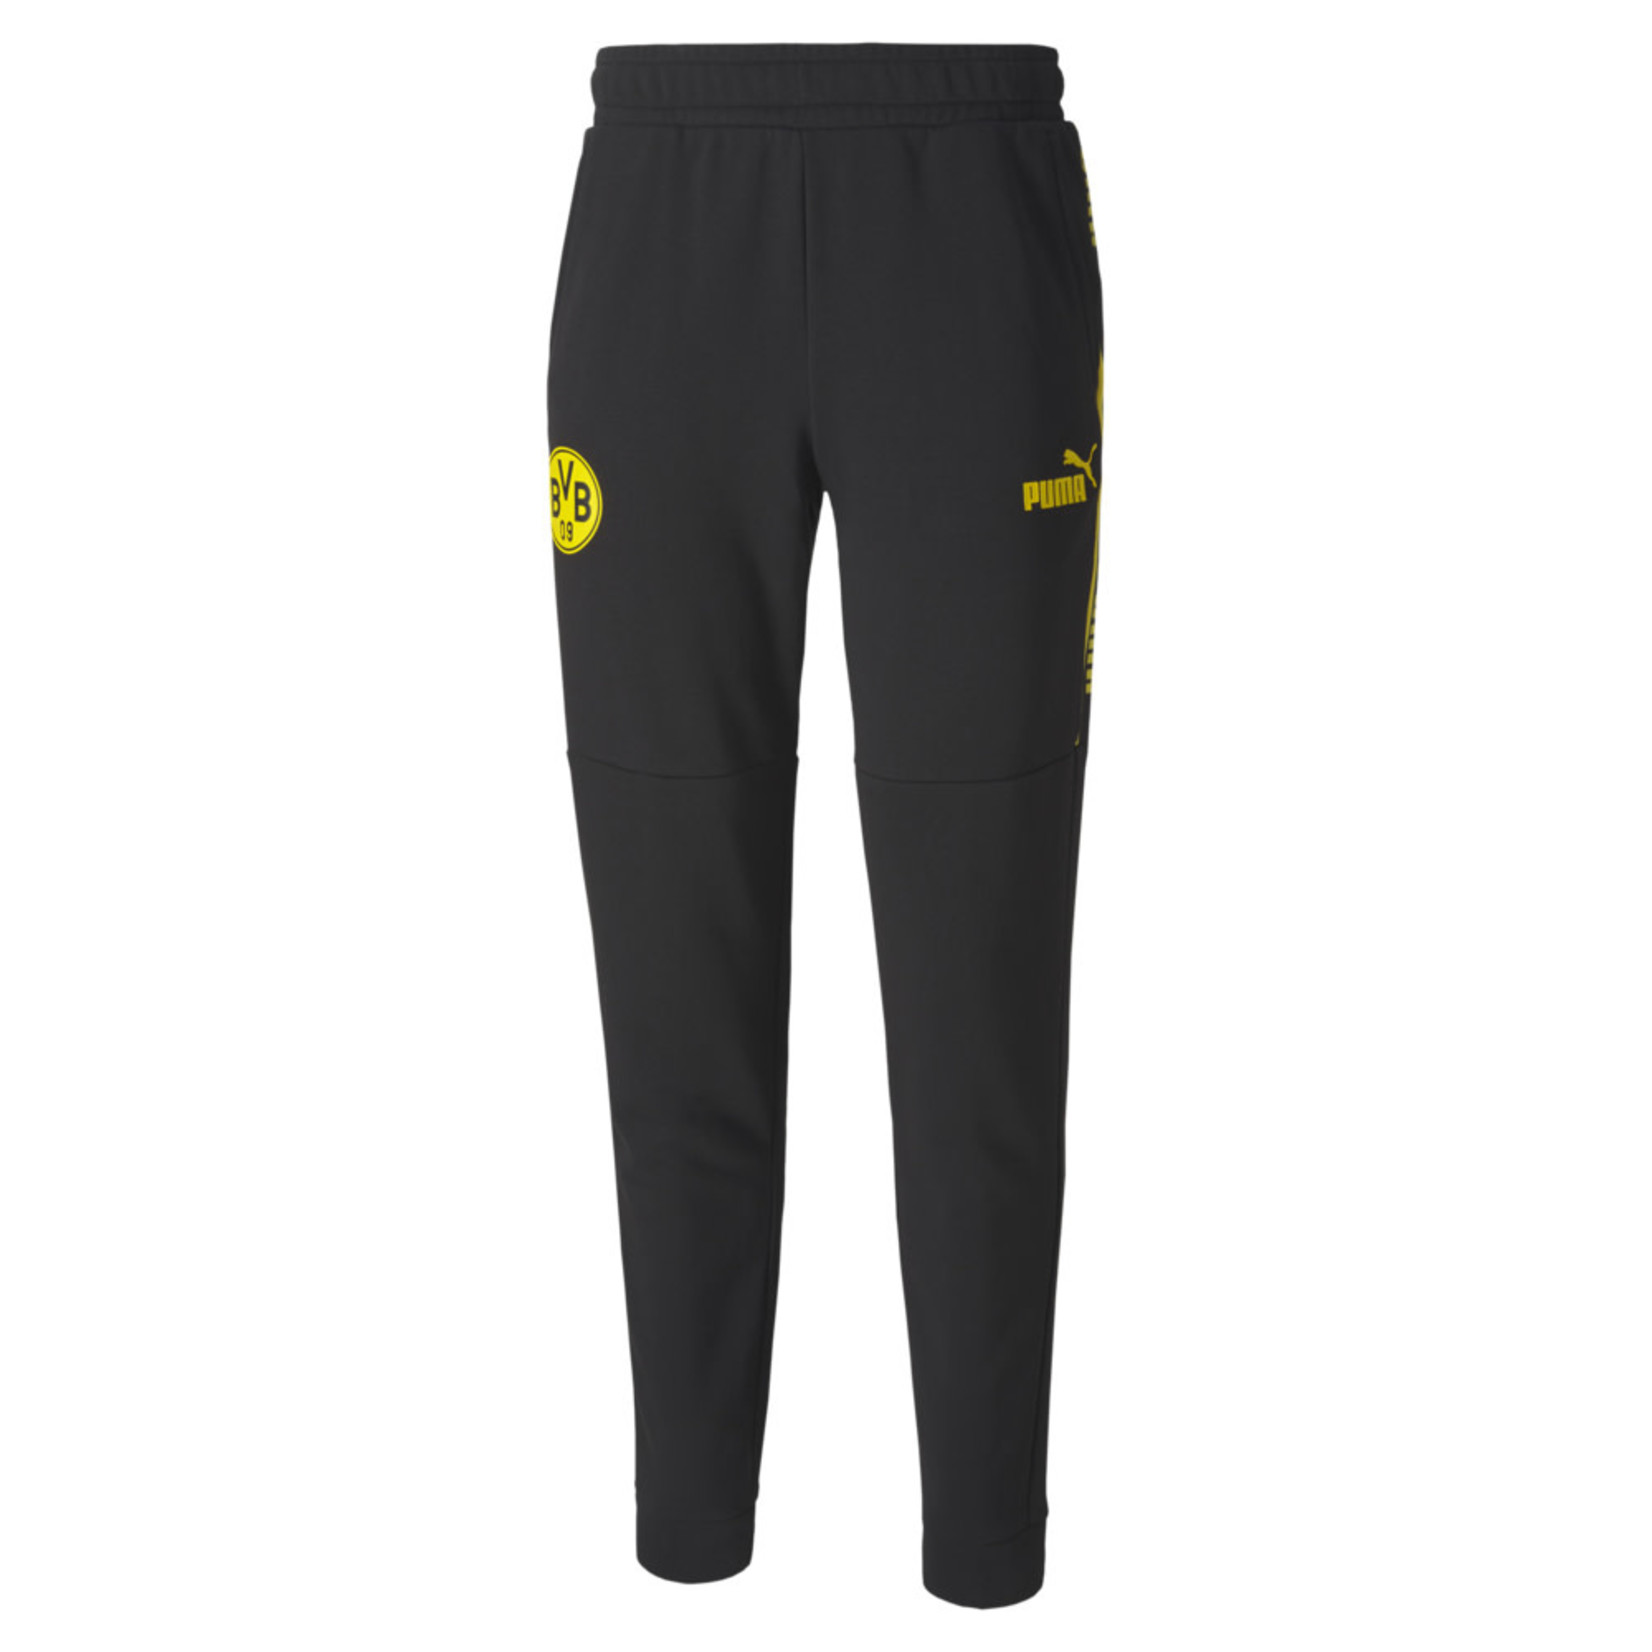 Puma Borussia Dortmund Track Pants